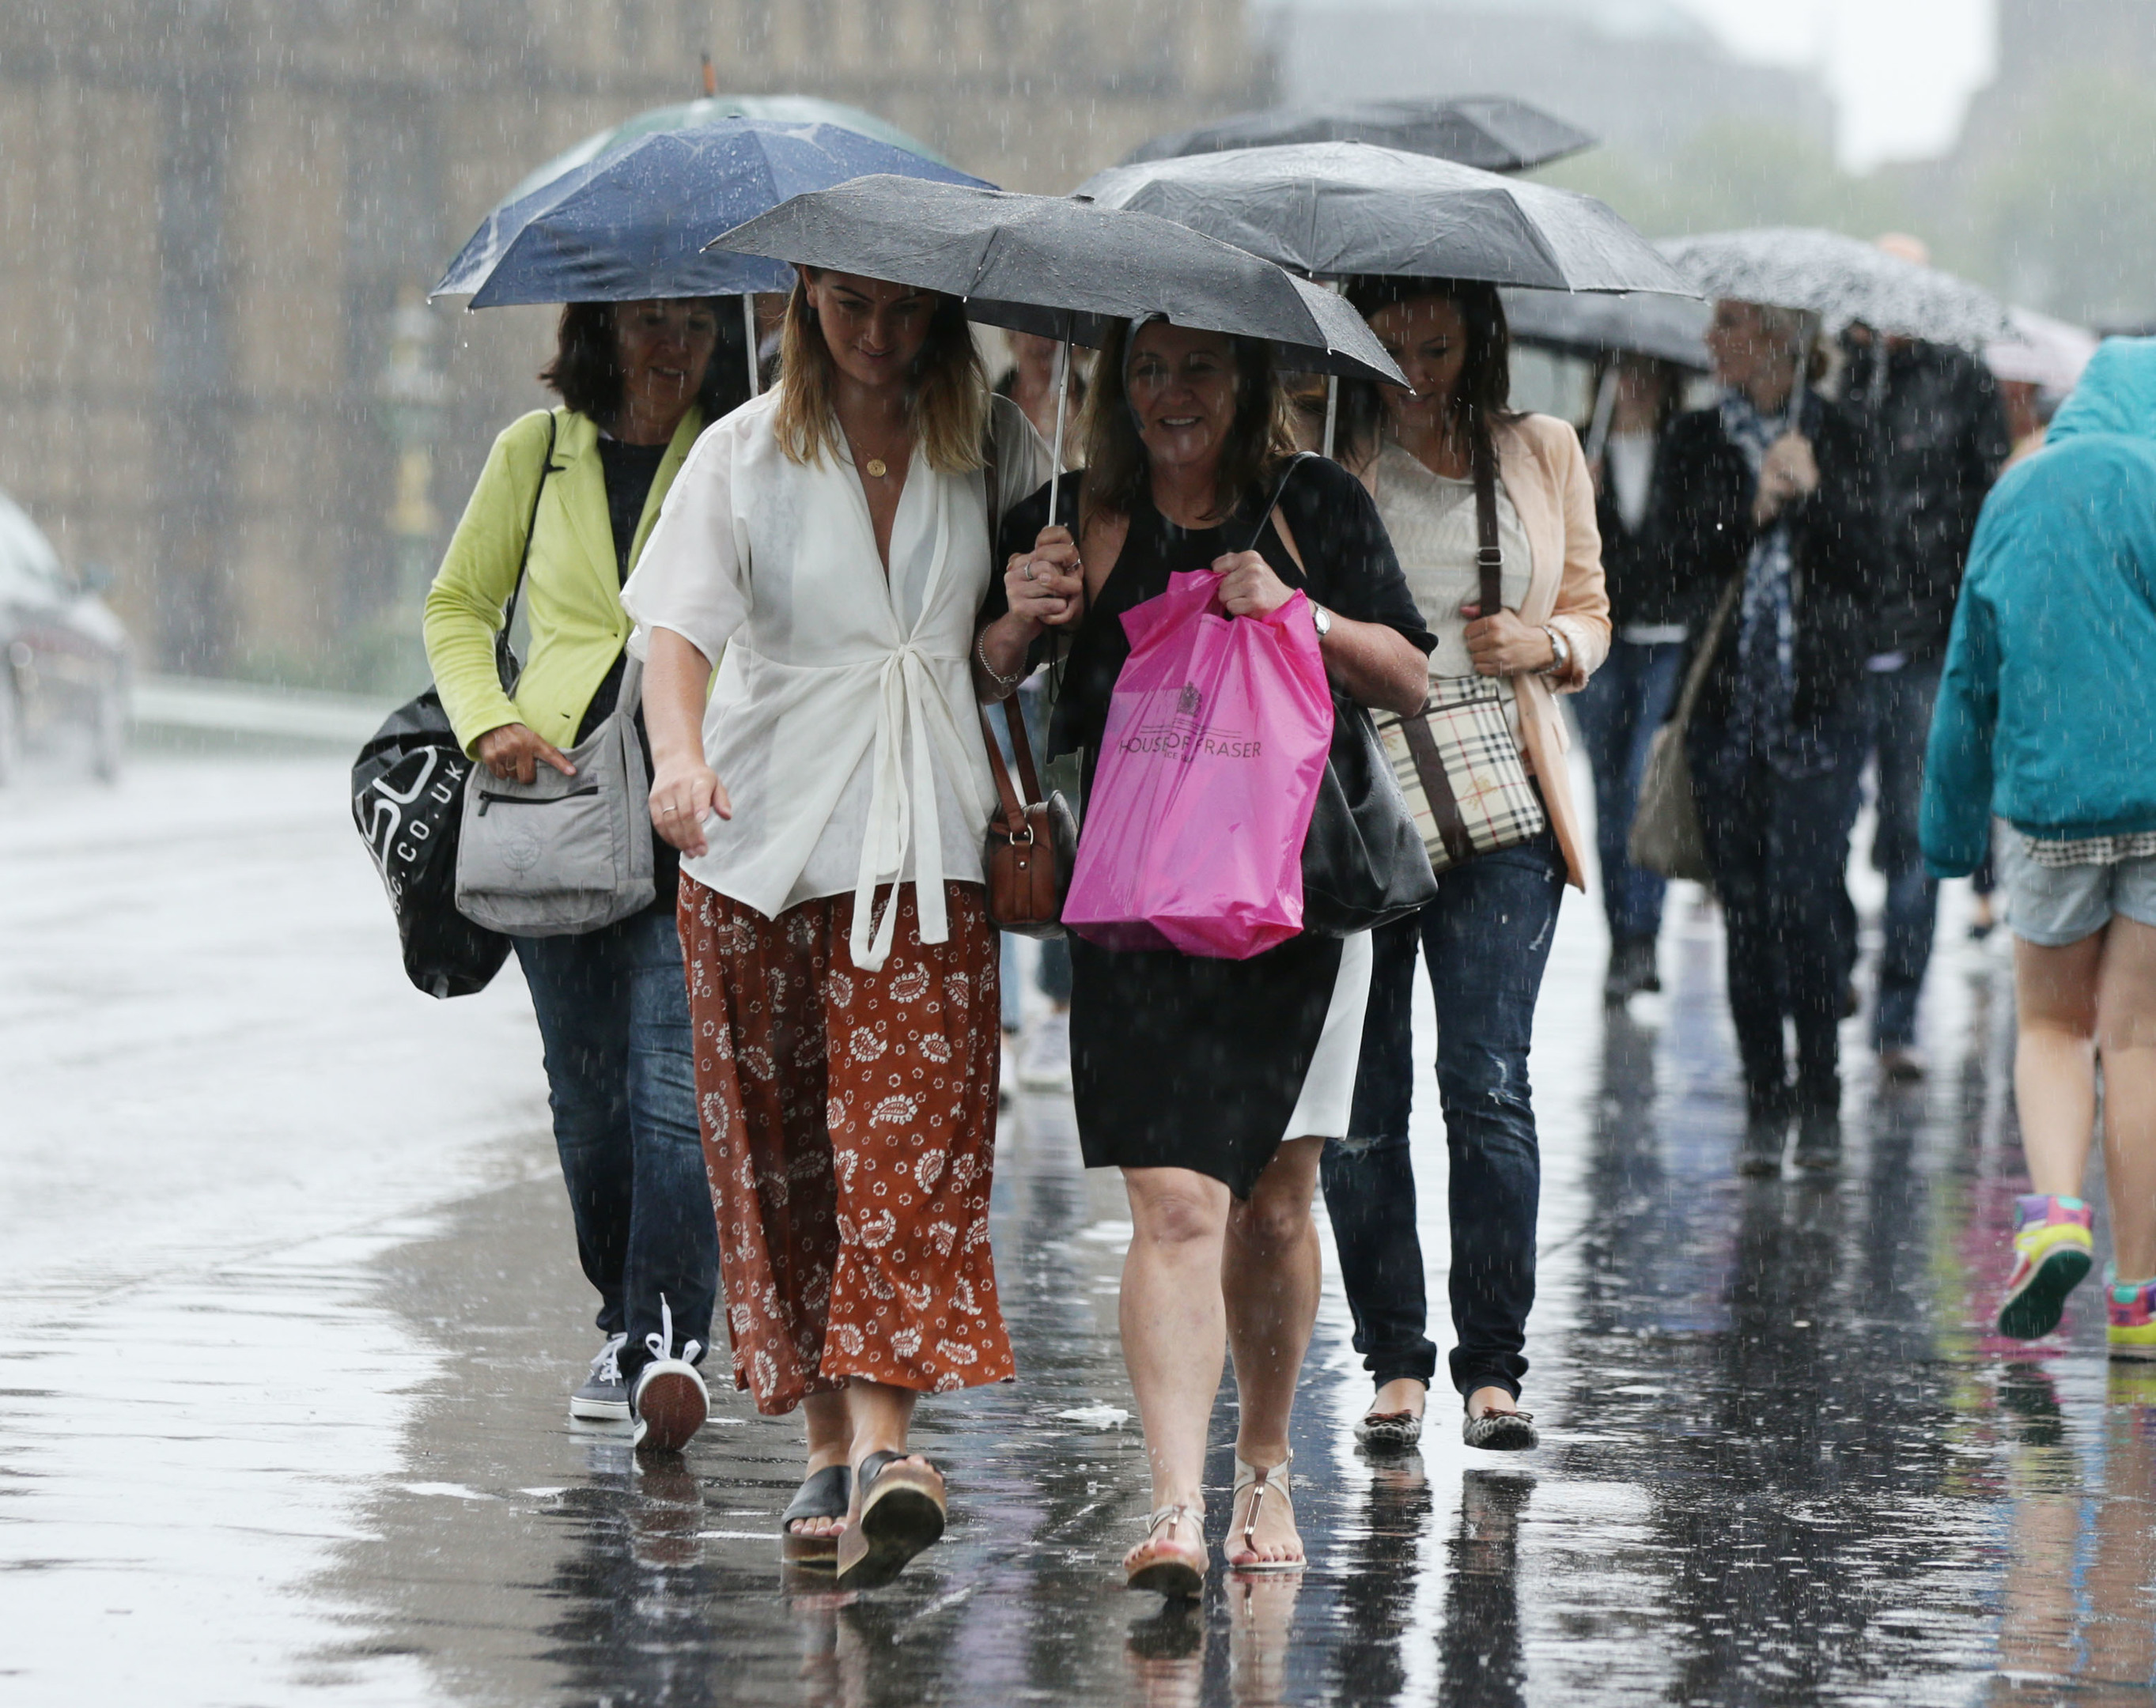 People shelter under umbrellas during heavy rain.